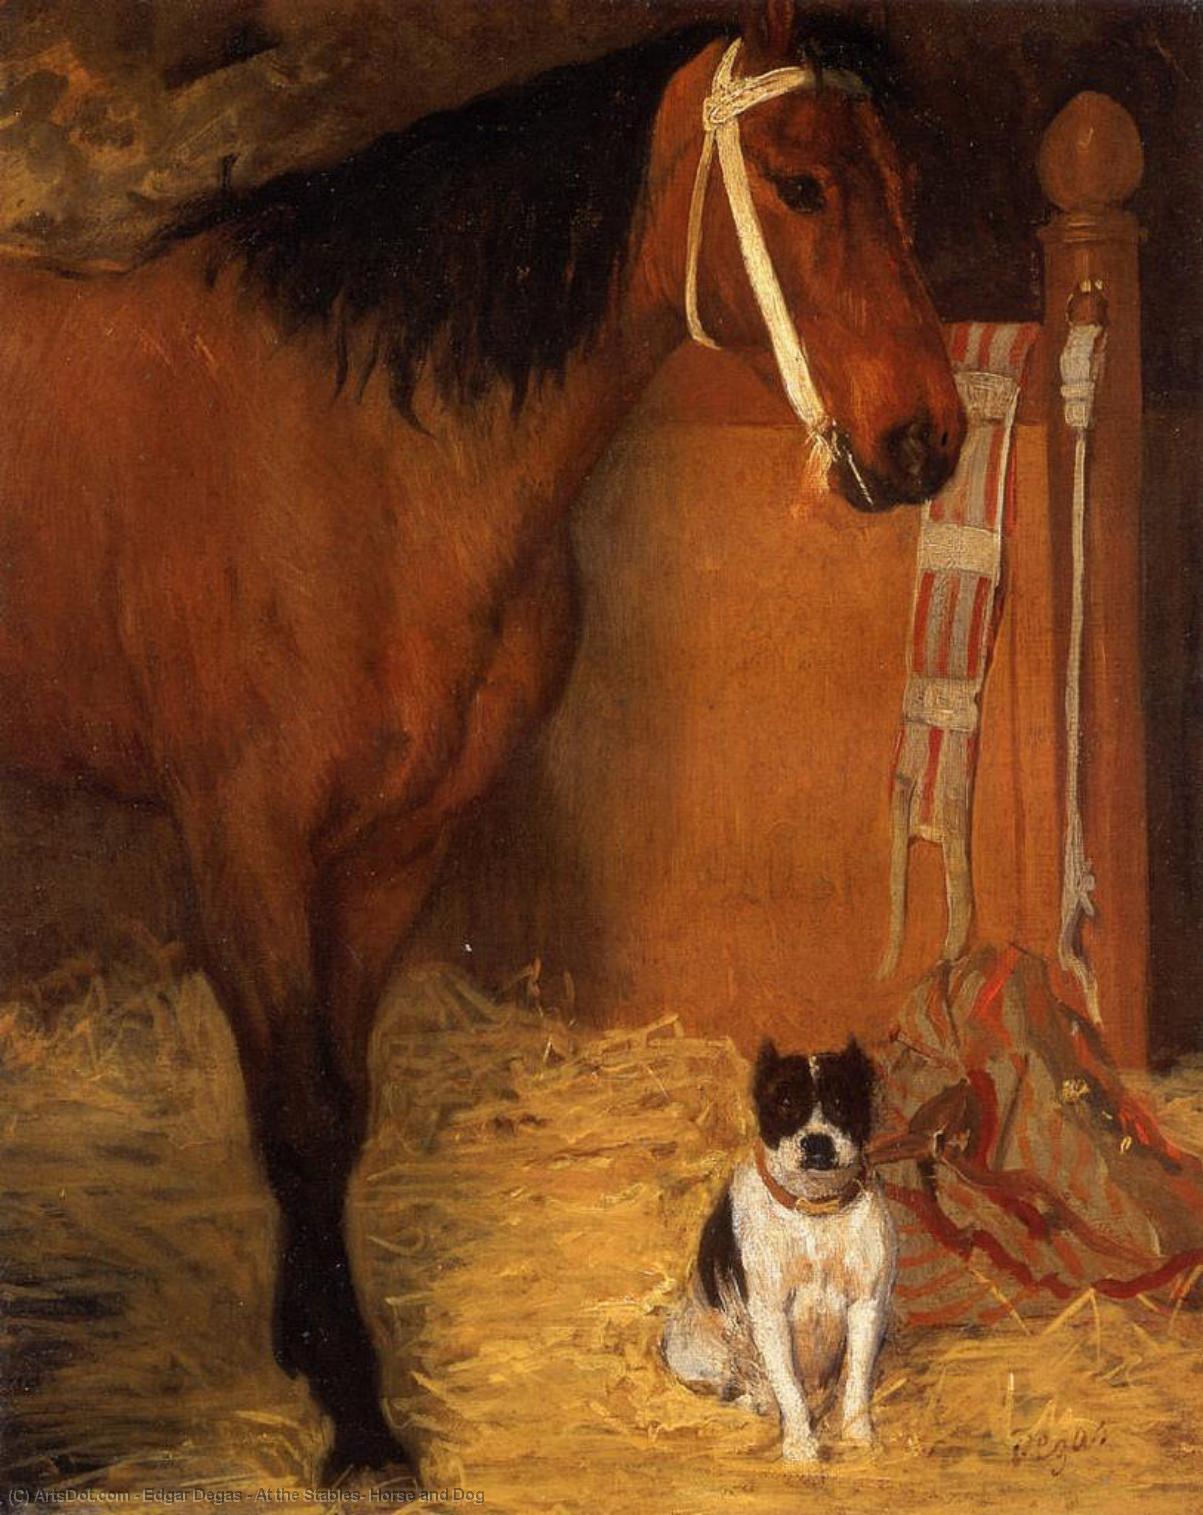 Order Artwork Replica At the Stables, Horse and Dog, 1861 by Edgar Degas (1834-1917, France) | ArtsDot.com